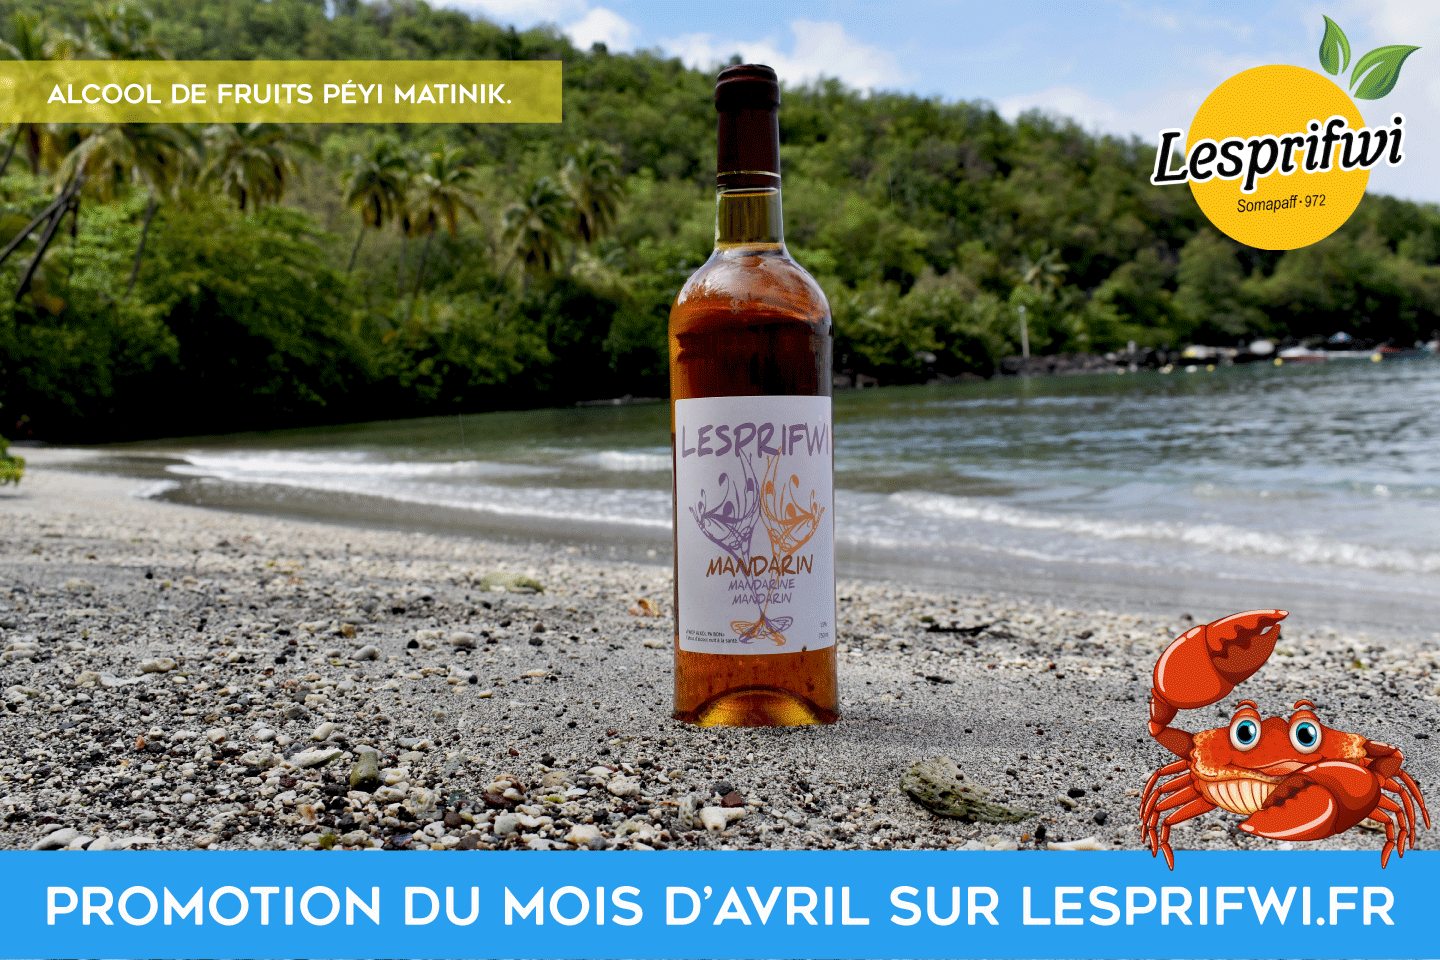 Alcool de fruits pays Martinique, Lesprifwi - Somapaff 972